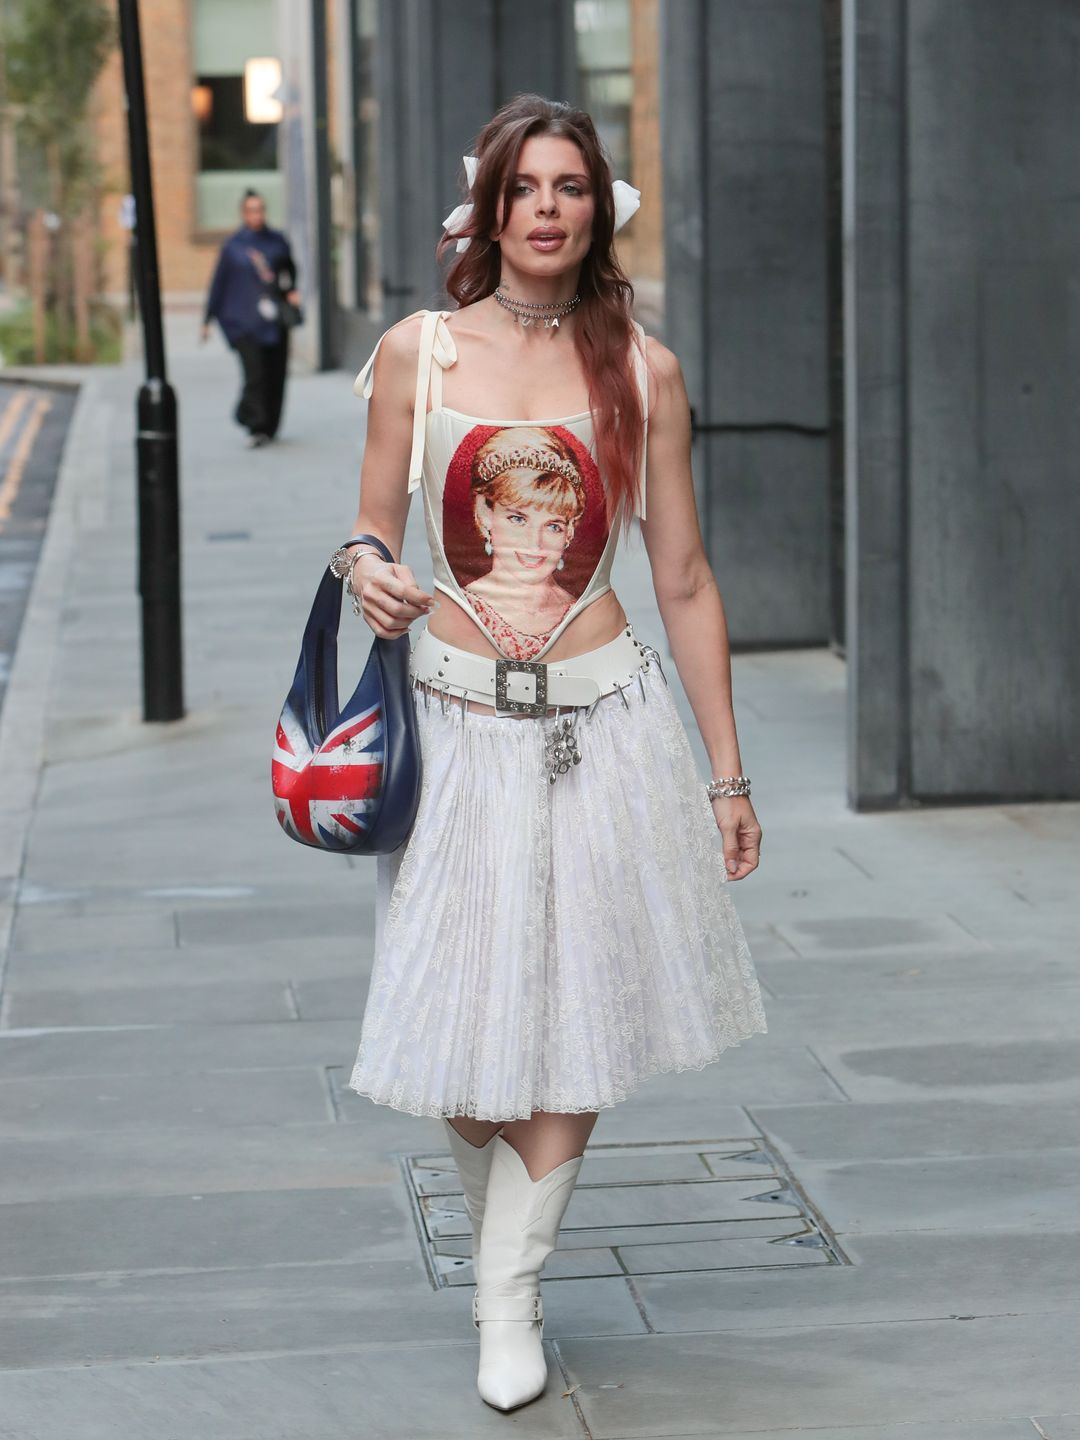 Julia Fox wore the Princess Diana corset during her London trip